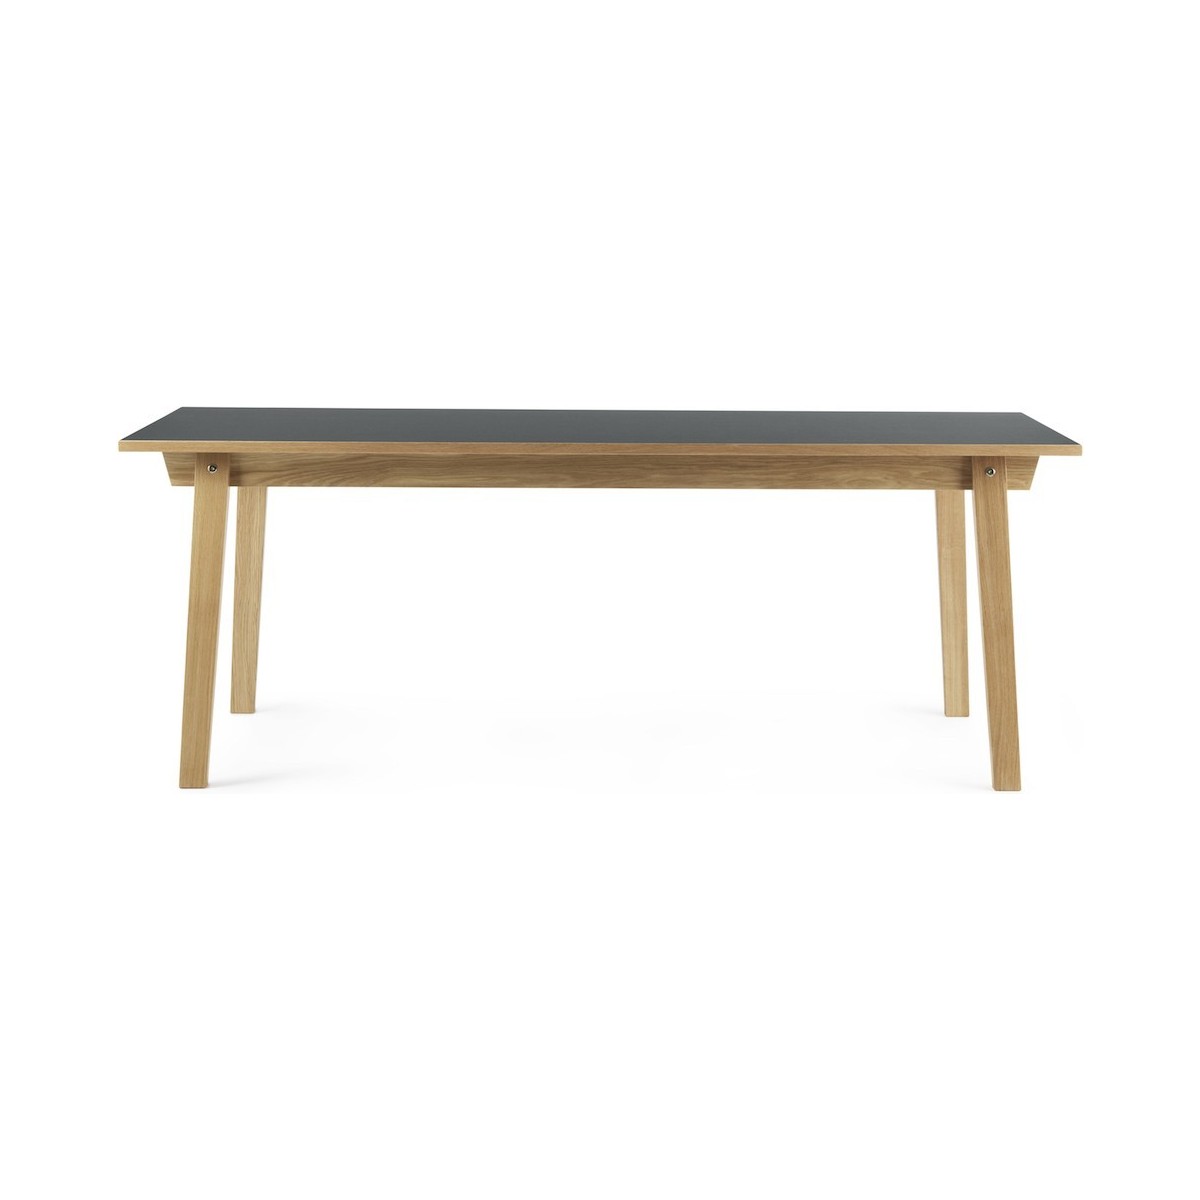 grey - 90x200cm - rectangular dining Slice table